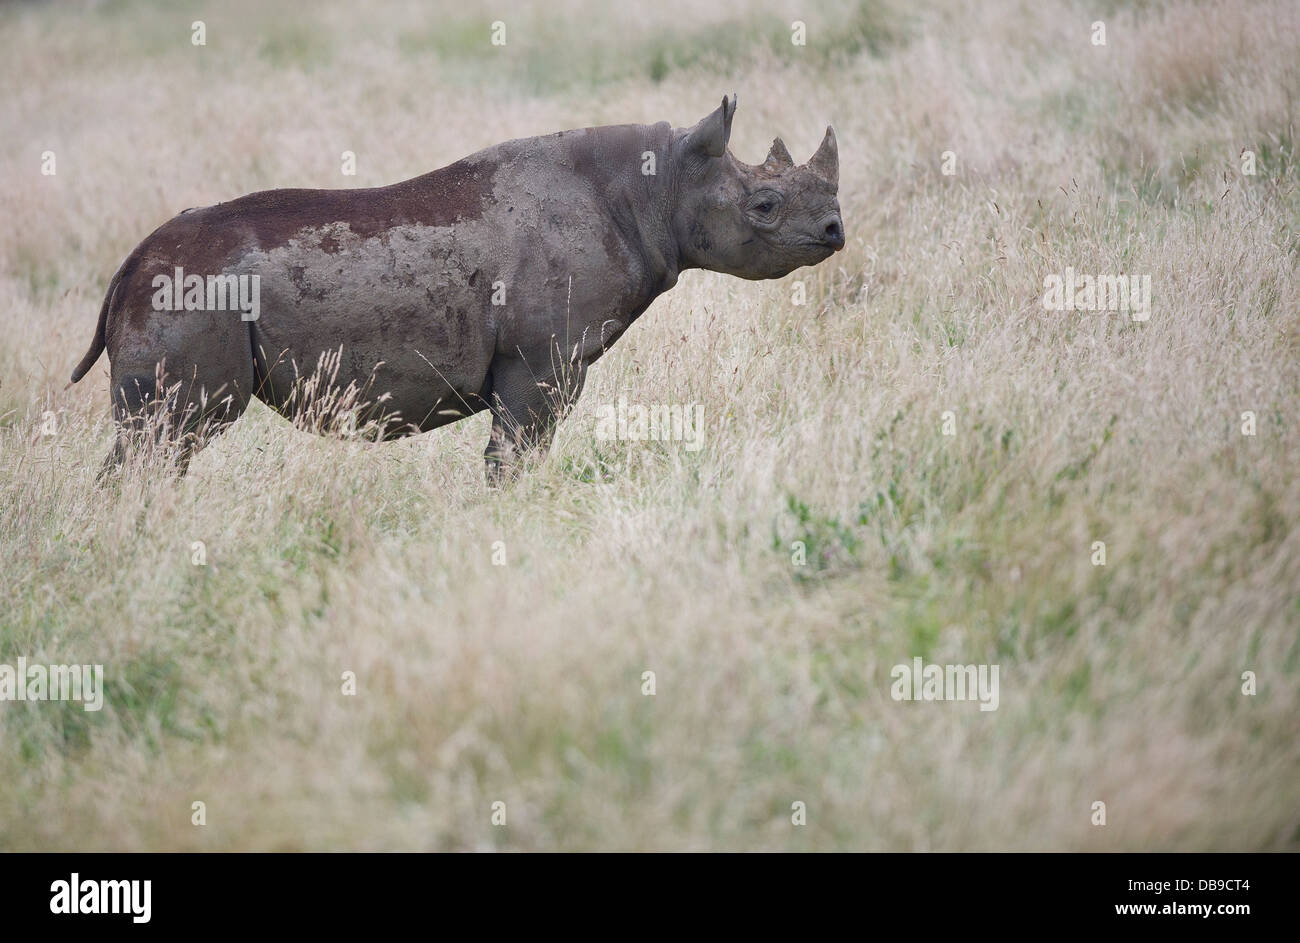 An Eastern Black Rhinoceros (Diceros bicornis michaeli), also known as the East African black rhinoceros. Stock Photo